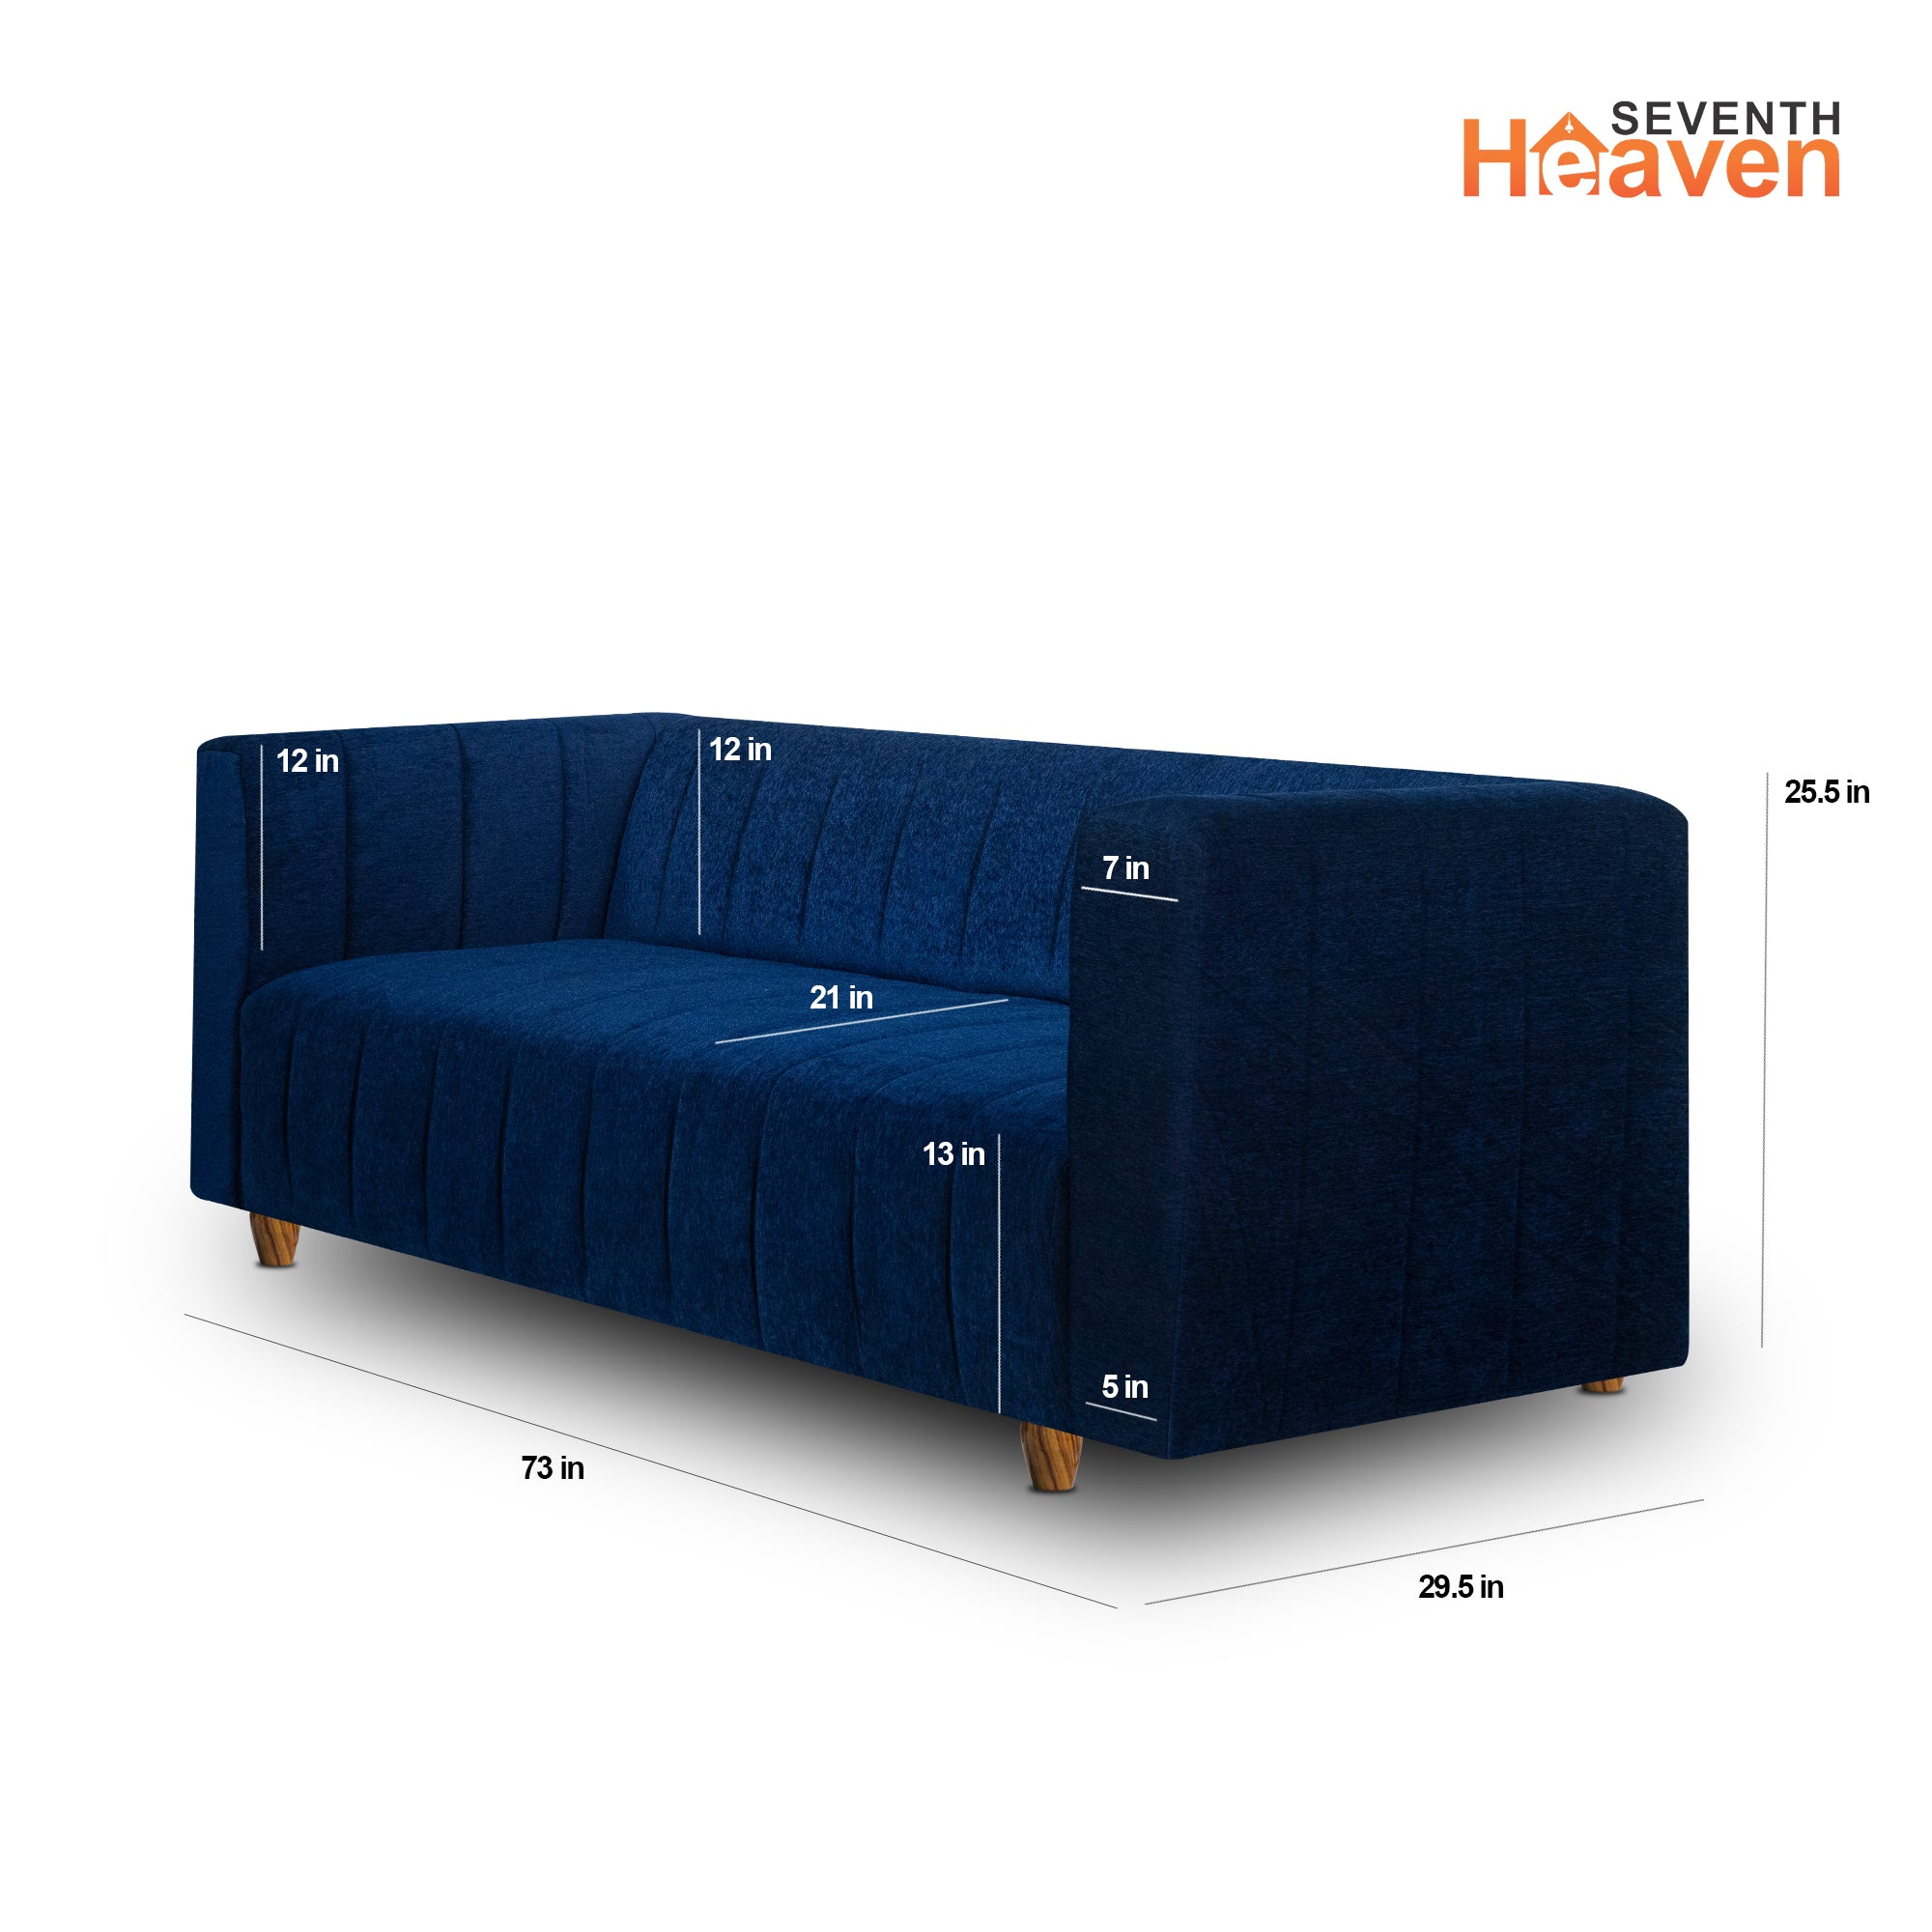 Seventh Heaven Tokyo 3 Seater Sofa, Extra Spacious, Chenille Molfino Fabric: 3 Year Warranty Fabric 3 Seater Sofa Dark blue (Finish Color -Maroon, DIY(Do-It-Yourself)